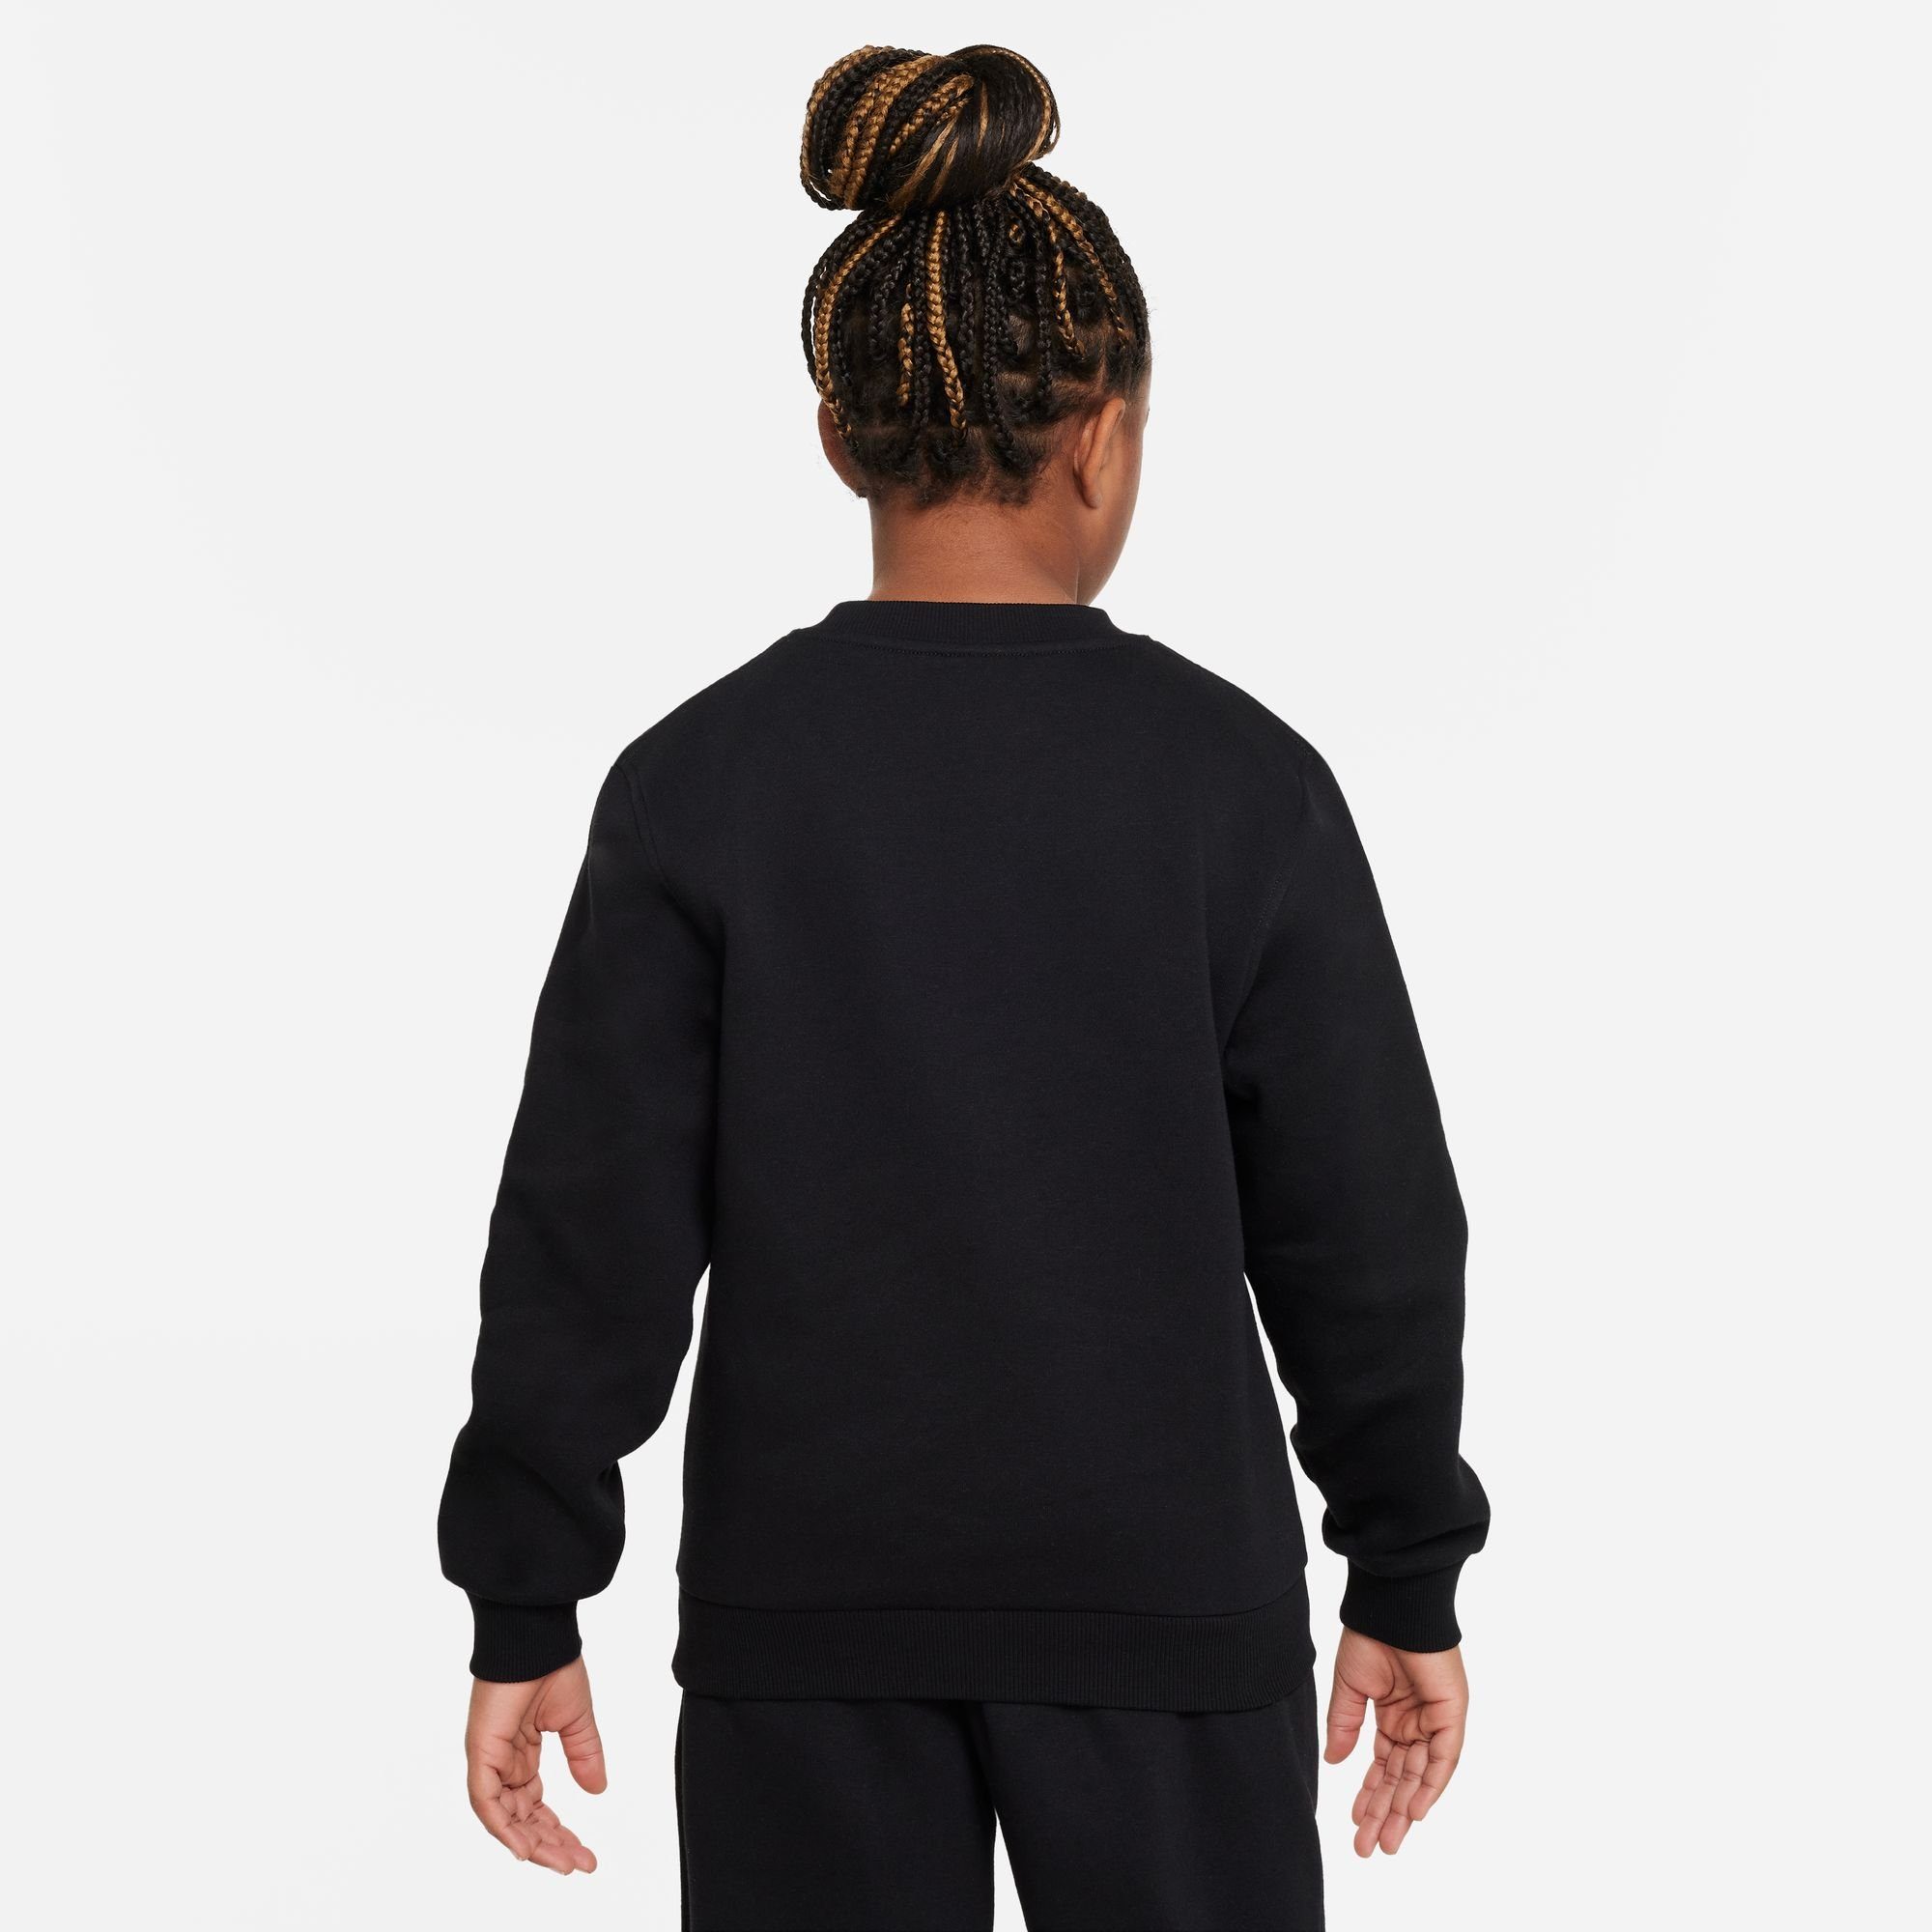 FLEECE KIDS' CLUB BLACK/WHITE Sportswear BIG SWEATSHIRT Sweatshirt Nike